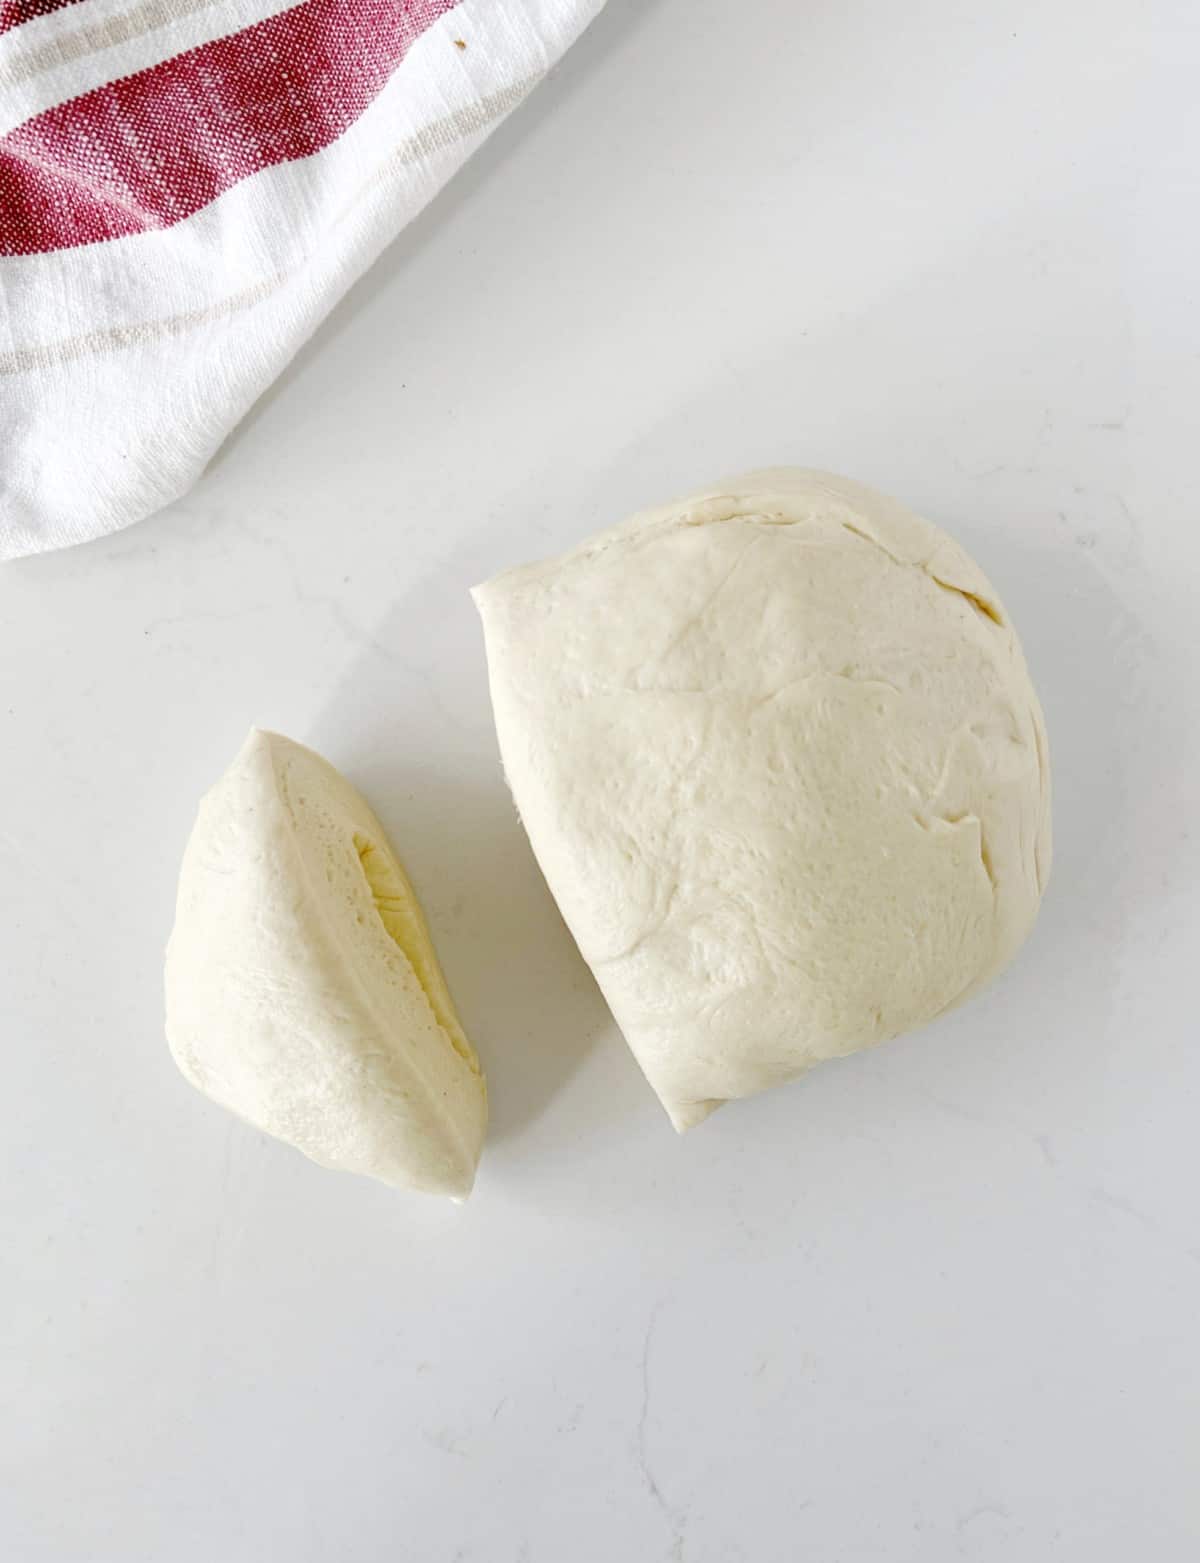 dough with cut piece 